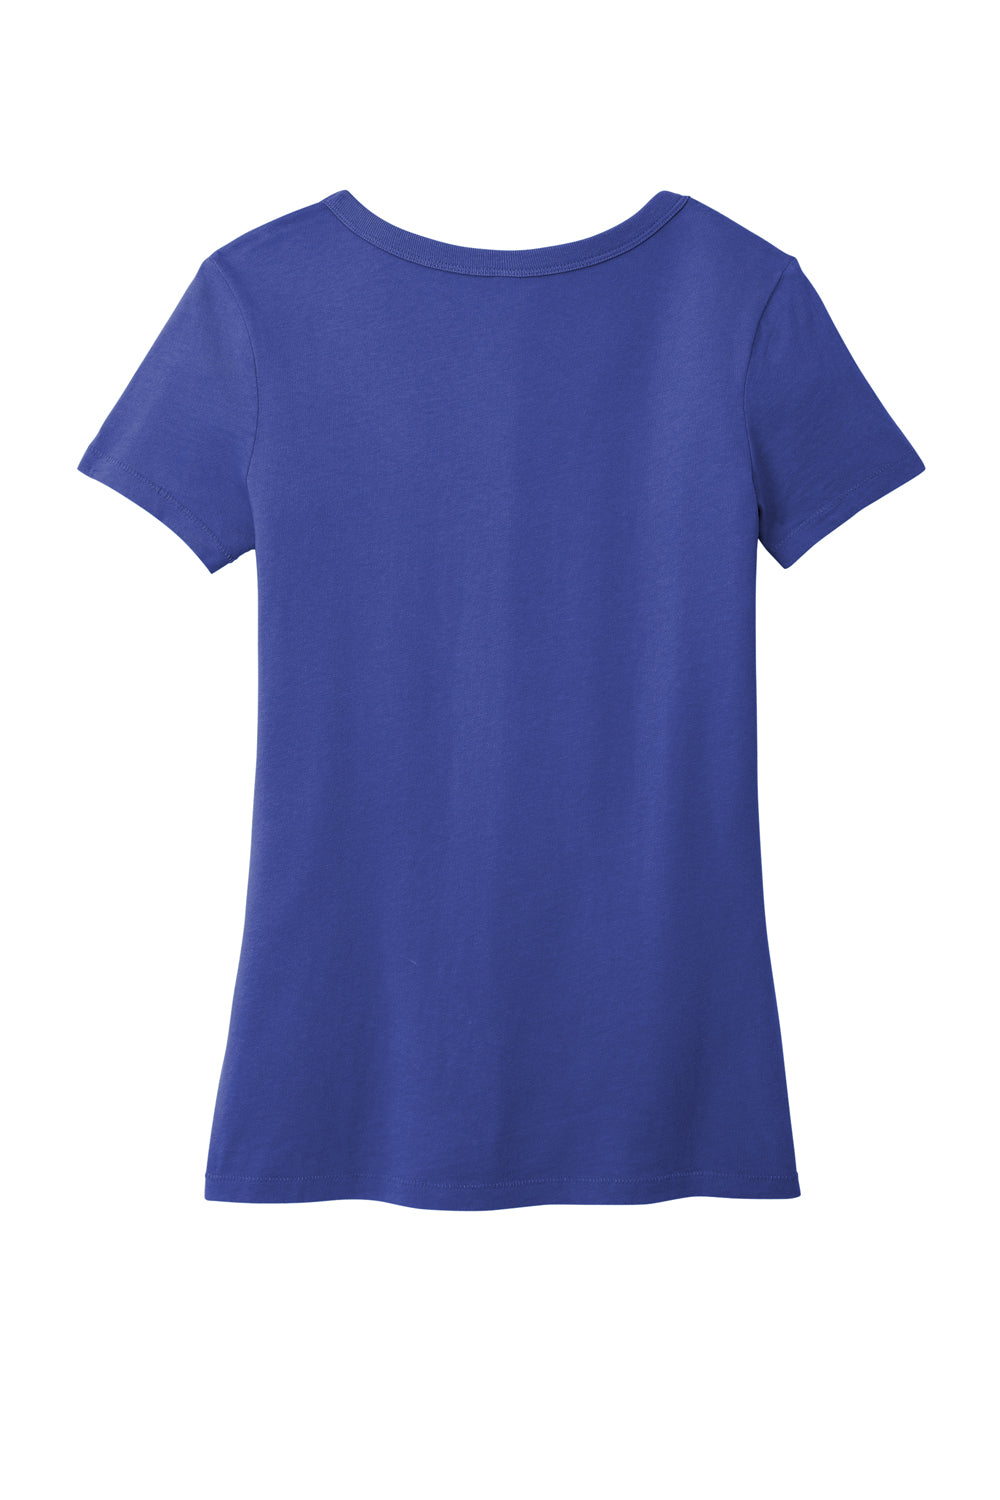 Port & Company LPC099V Womens Beach Wash Garment Dyed Short Sleeve V-Neck T-Shirt Blue Iris Flat Back